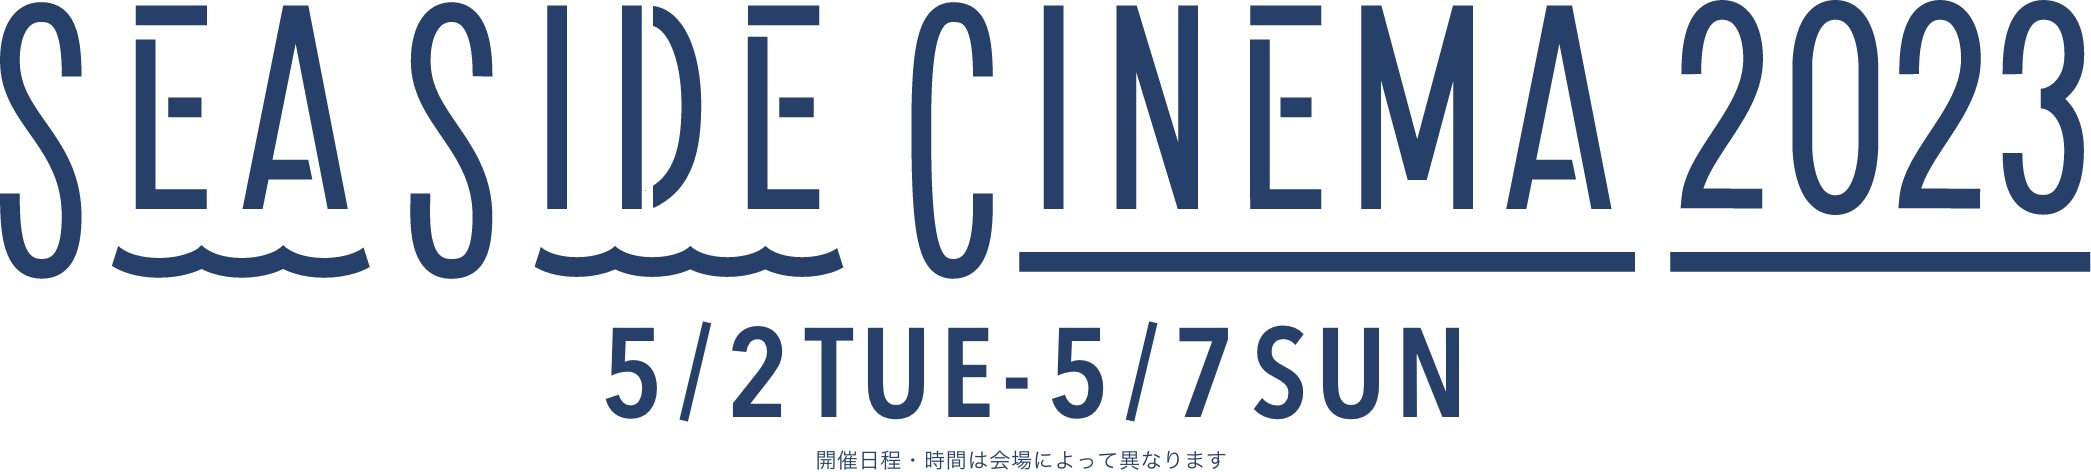 SEASIDE CINEMA 2023 - 5/2tue〜5/7fri 開催日程・時間は会場によって異なります